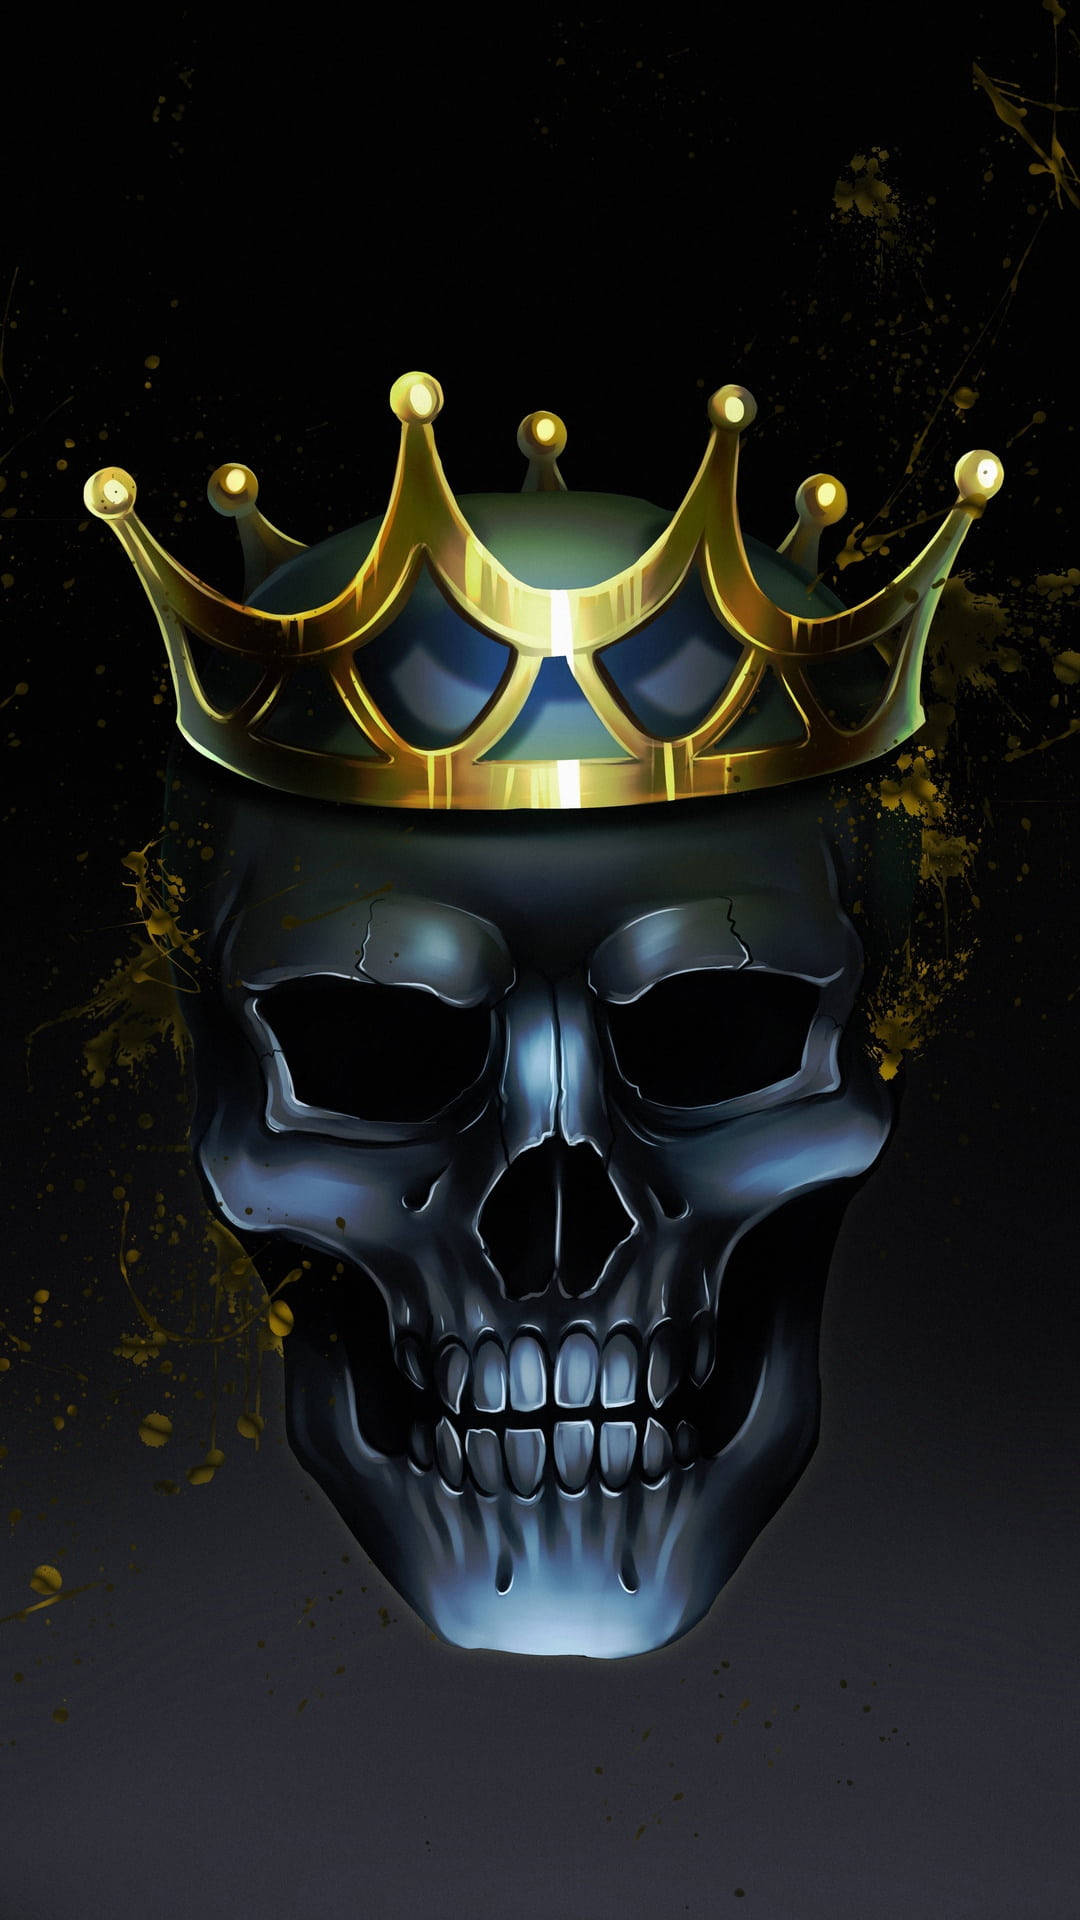 King Logo Full HD iPhone Wallpapers  Wallpaper Cave